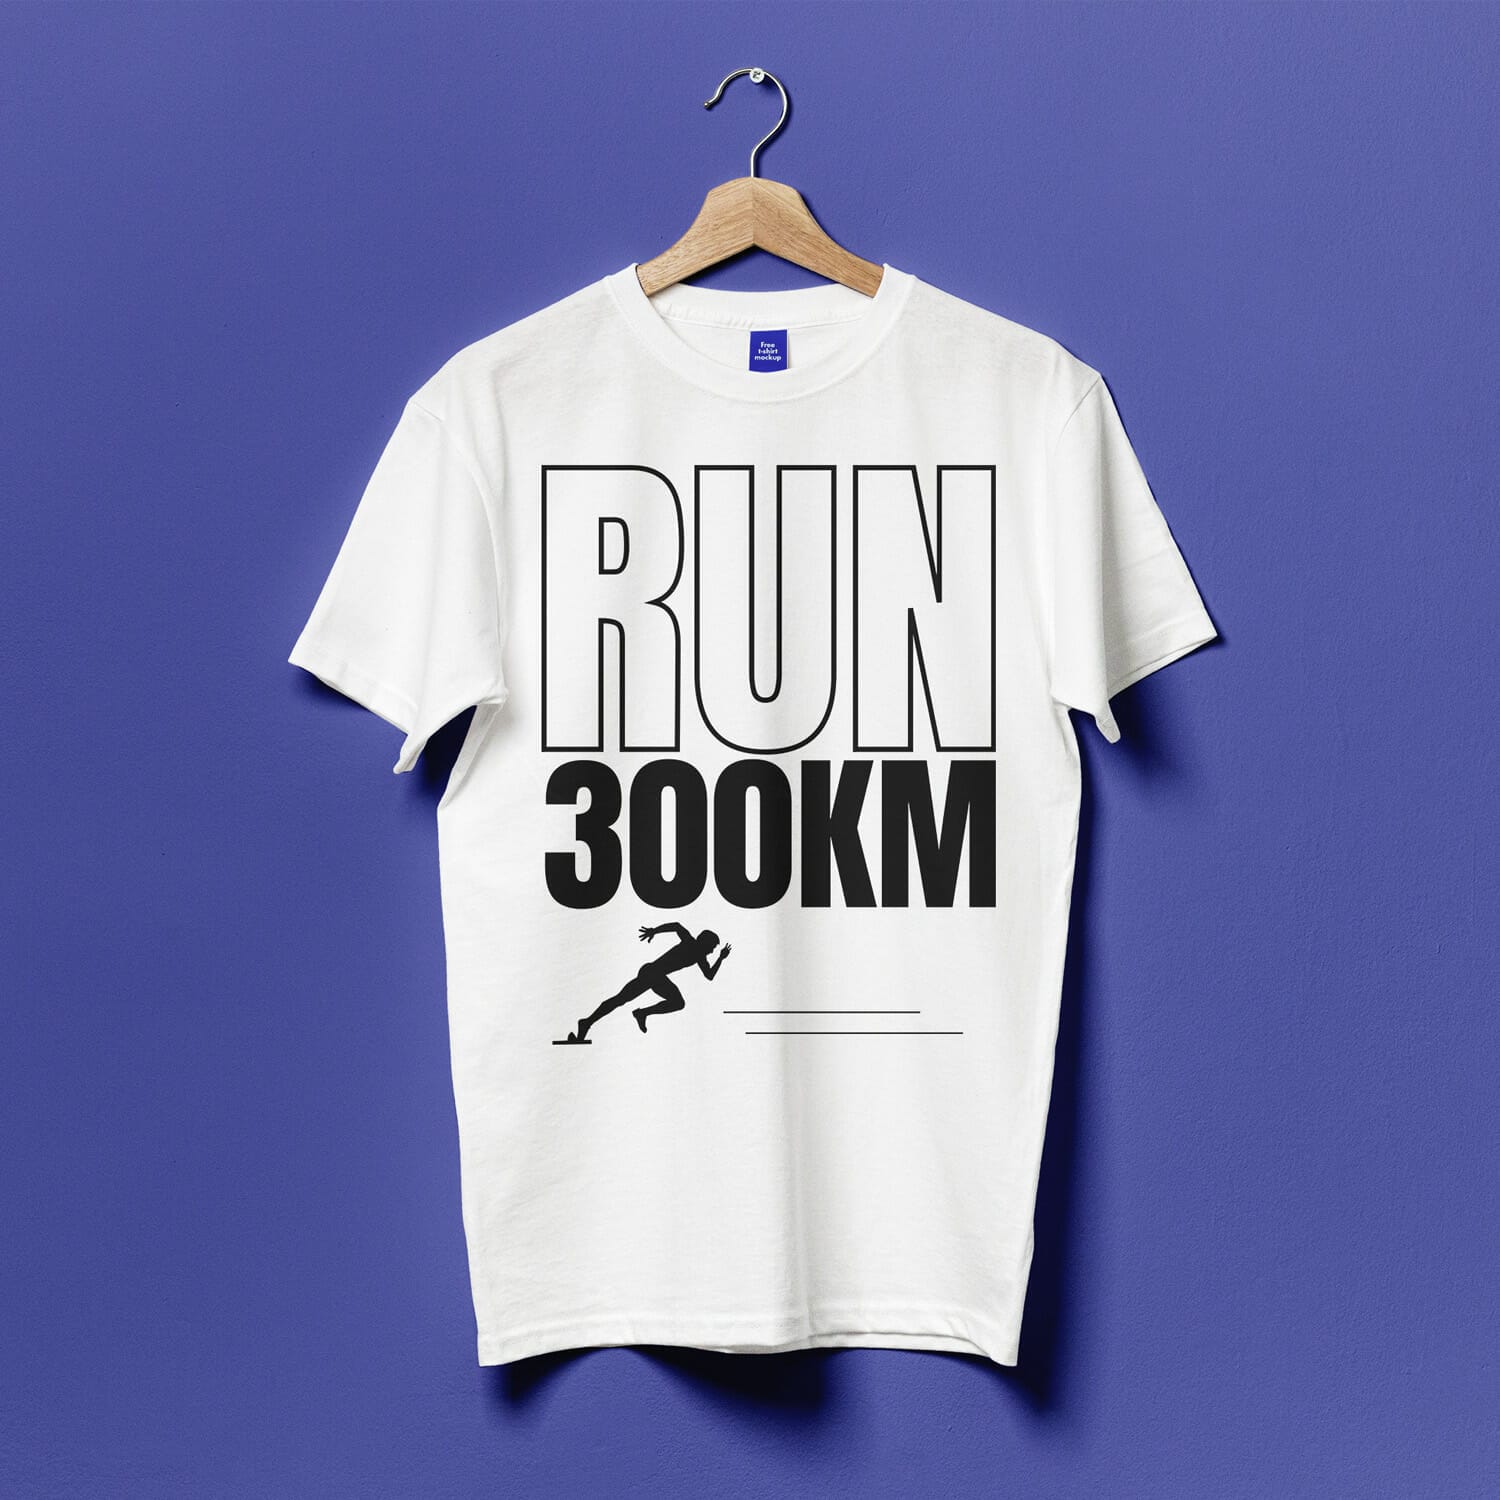 Run 300KM T-Shirt Design For Running